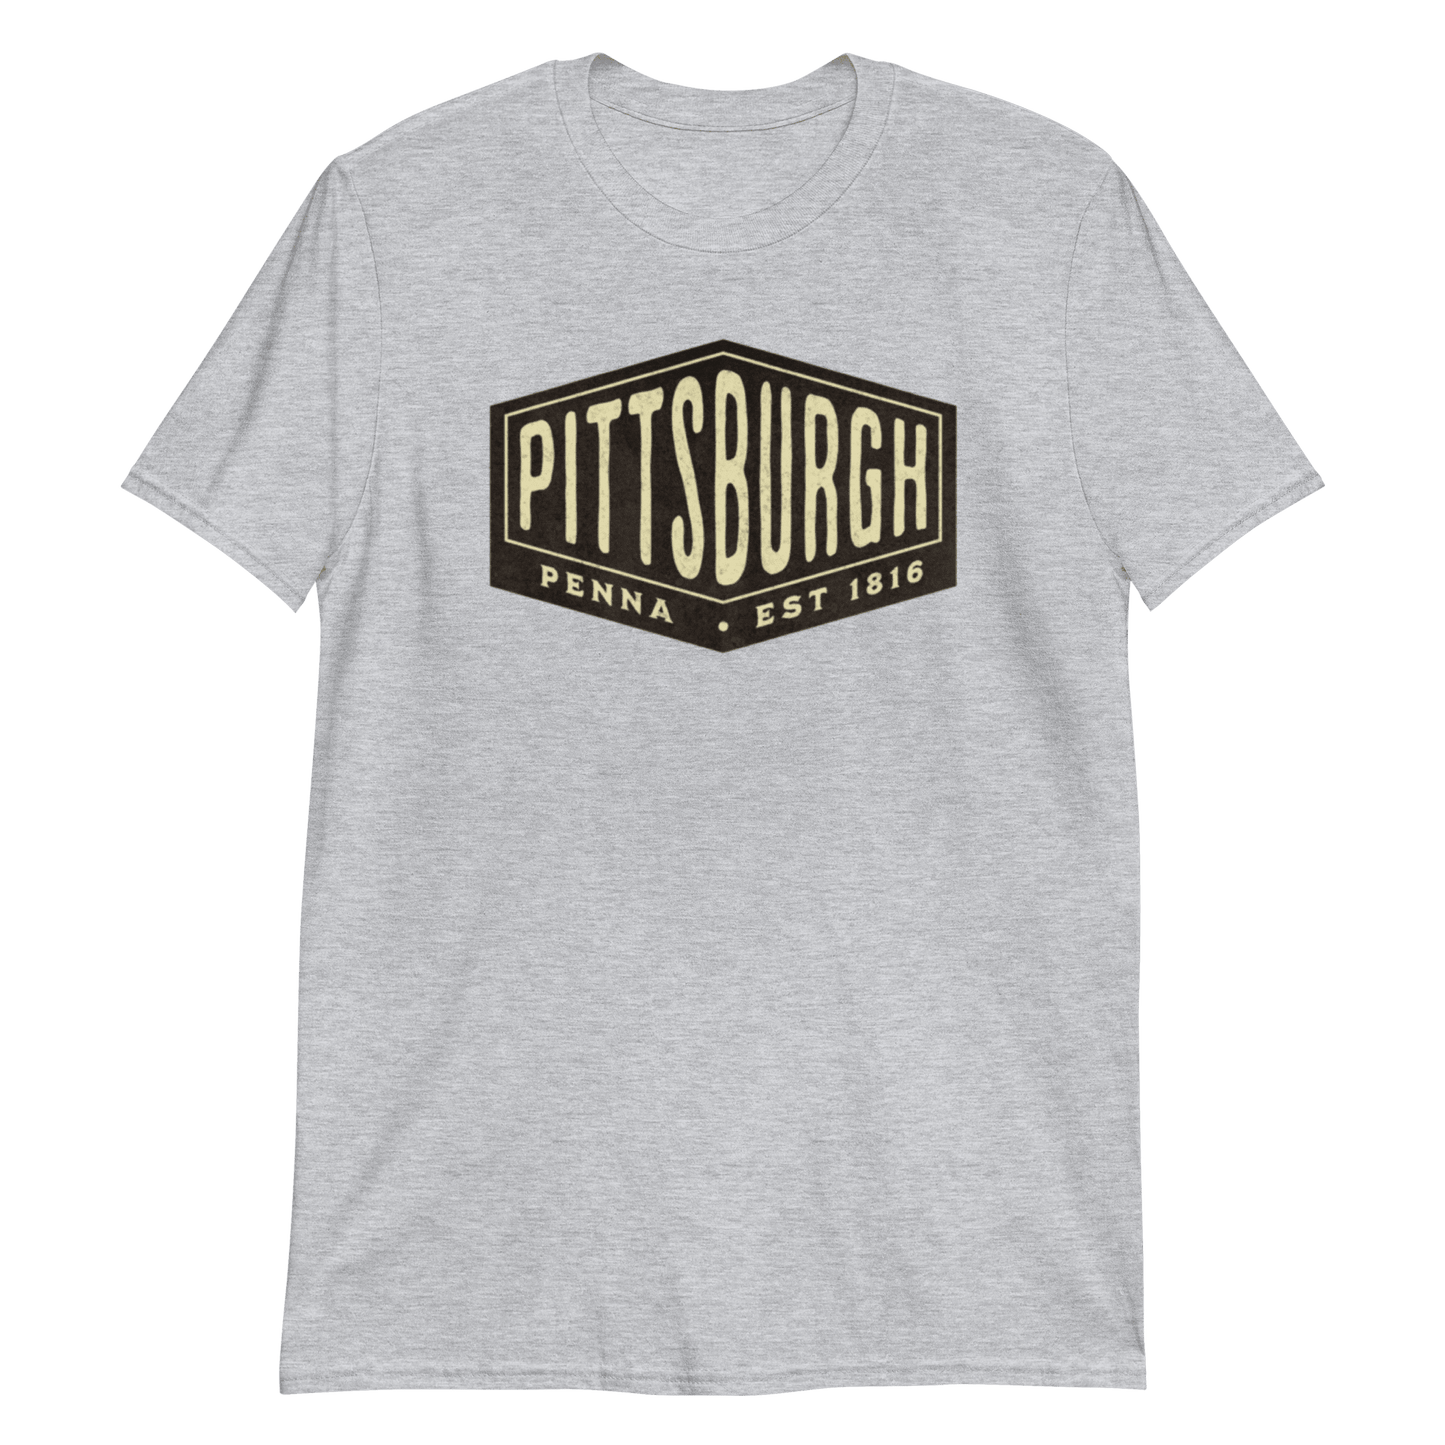 Pittsburgh Penna Est 1816 Vintage Graphic T-Shirt, Steel City Tee, Yinzer Shirt Yinzergear Sport Grey S 